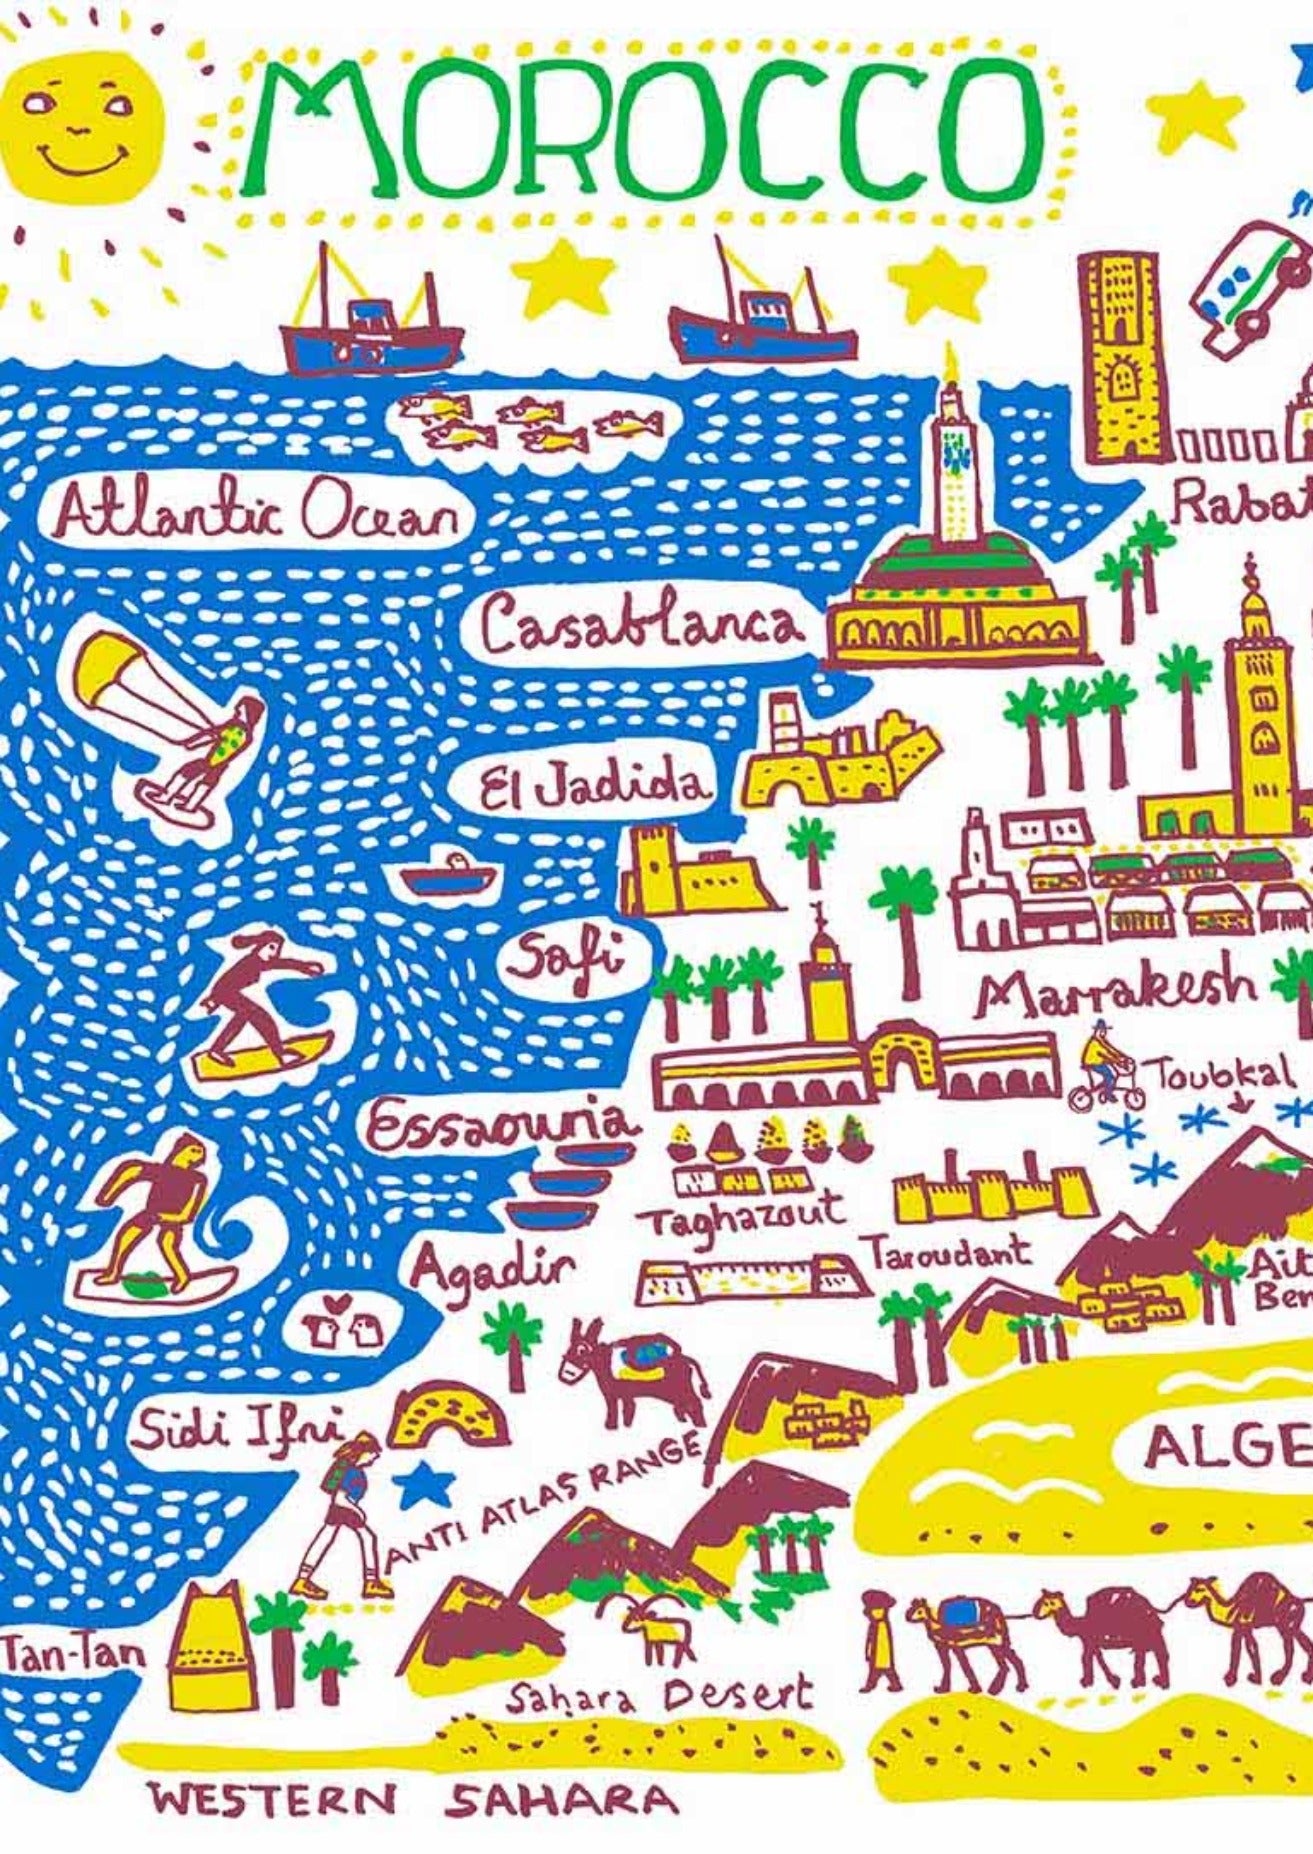 Morocco Greeting Card by Julia Gash